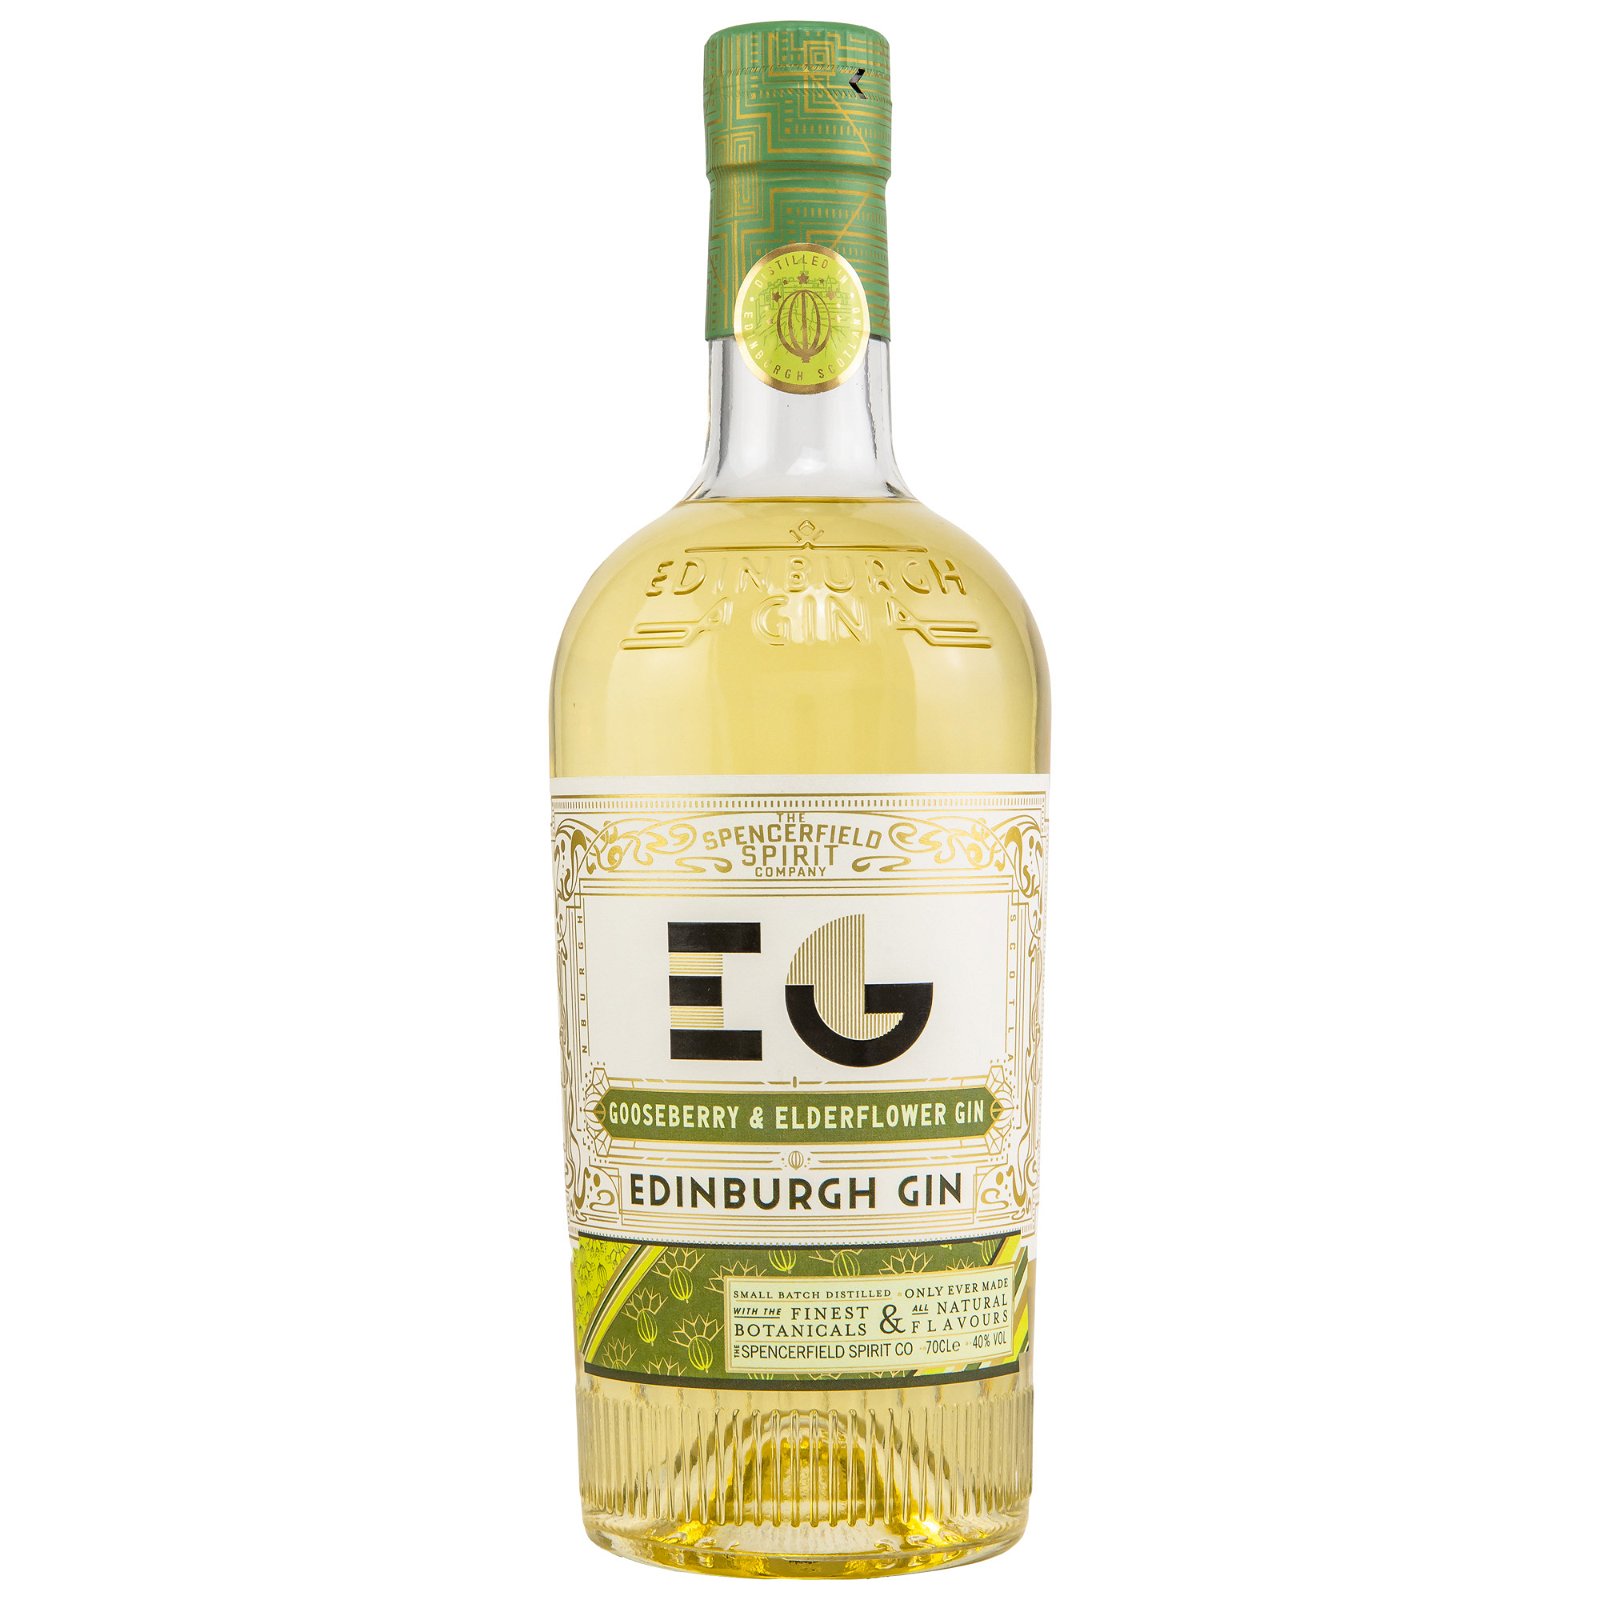 Edinburgh Gin Gooseberry & Elderflower Gin